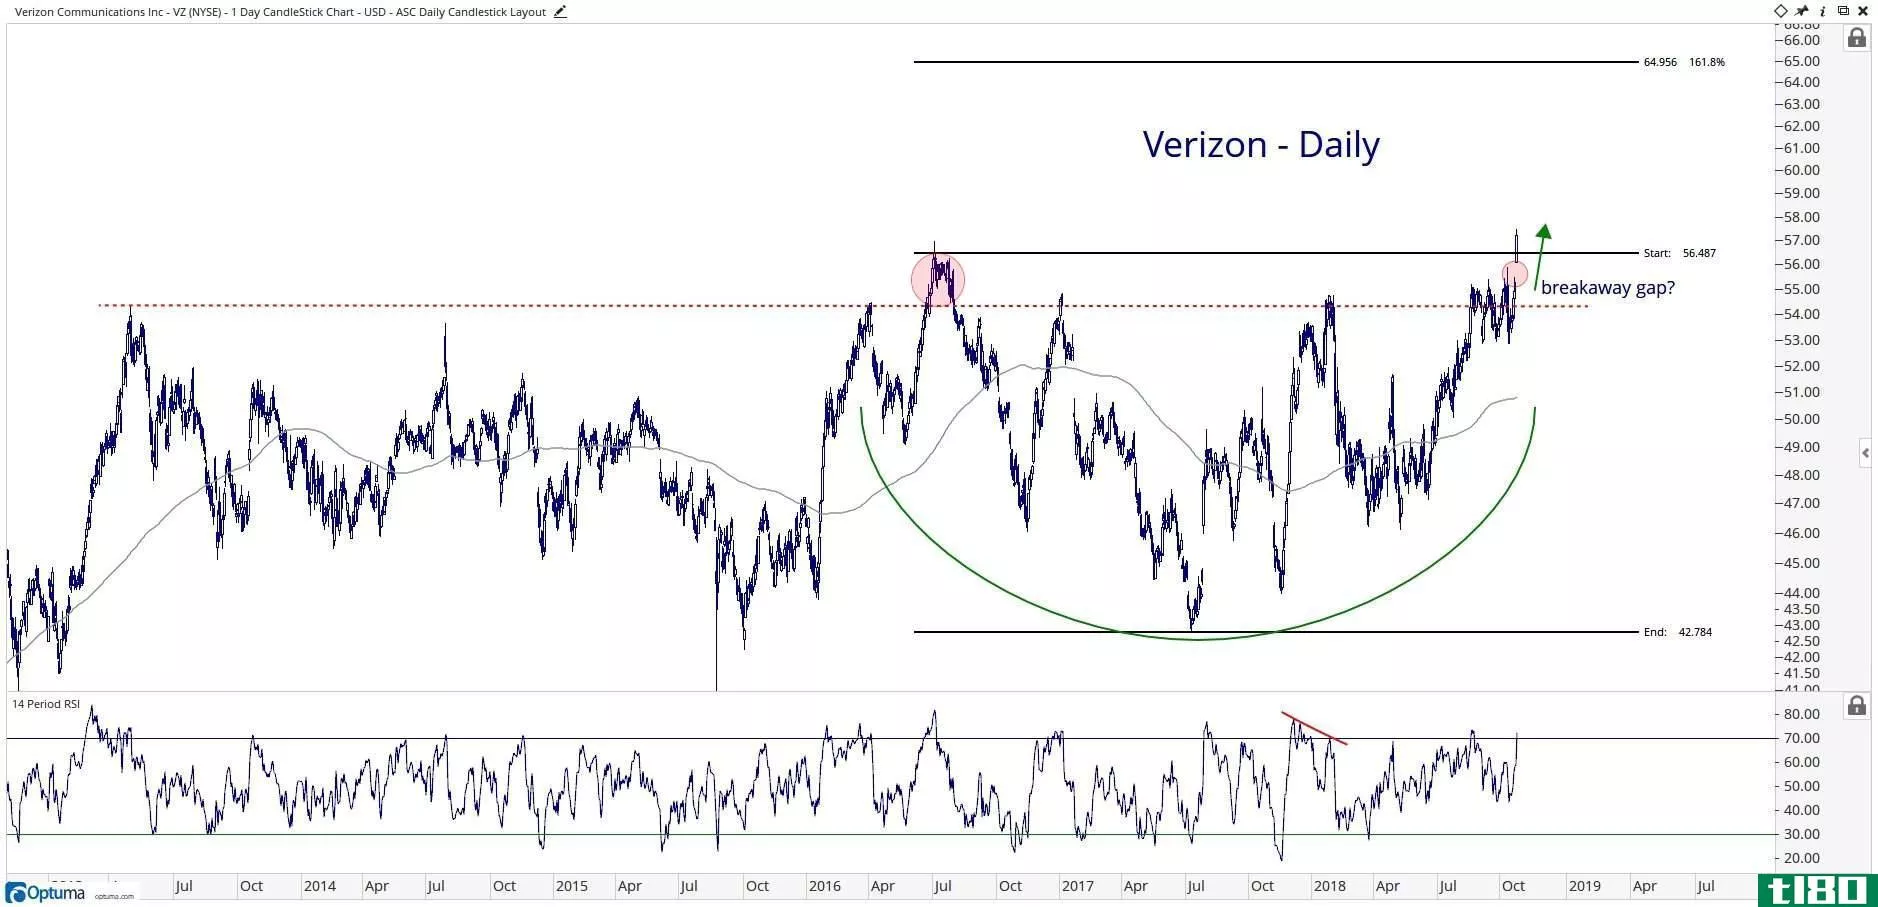 Daily technical chart showing the performance of Verizon Communicati*** Inc. (VZ) stock